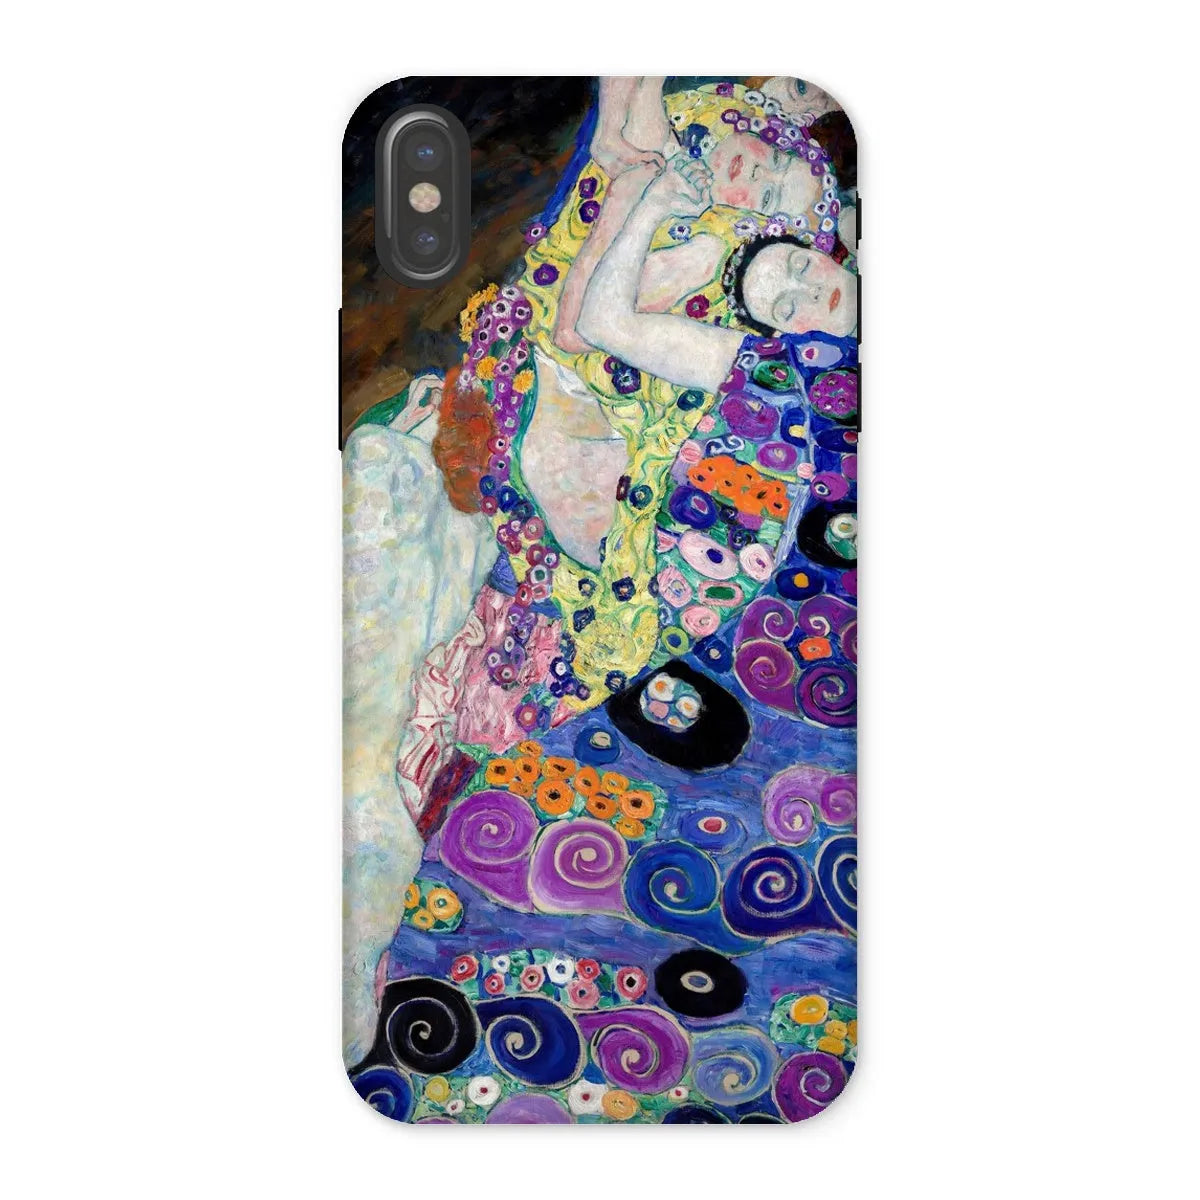 The Virgin - Vienna Secession Phone Case - Gustav Klimt - Iphone x / Matte - Mobile Phone Cases - Aesthetic Art